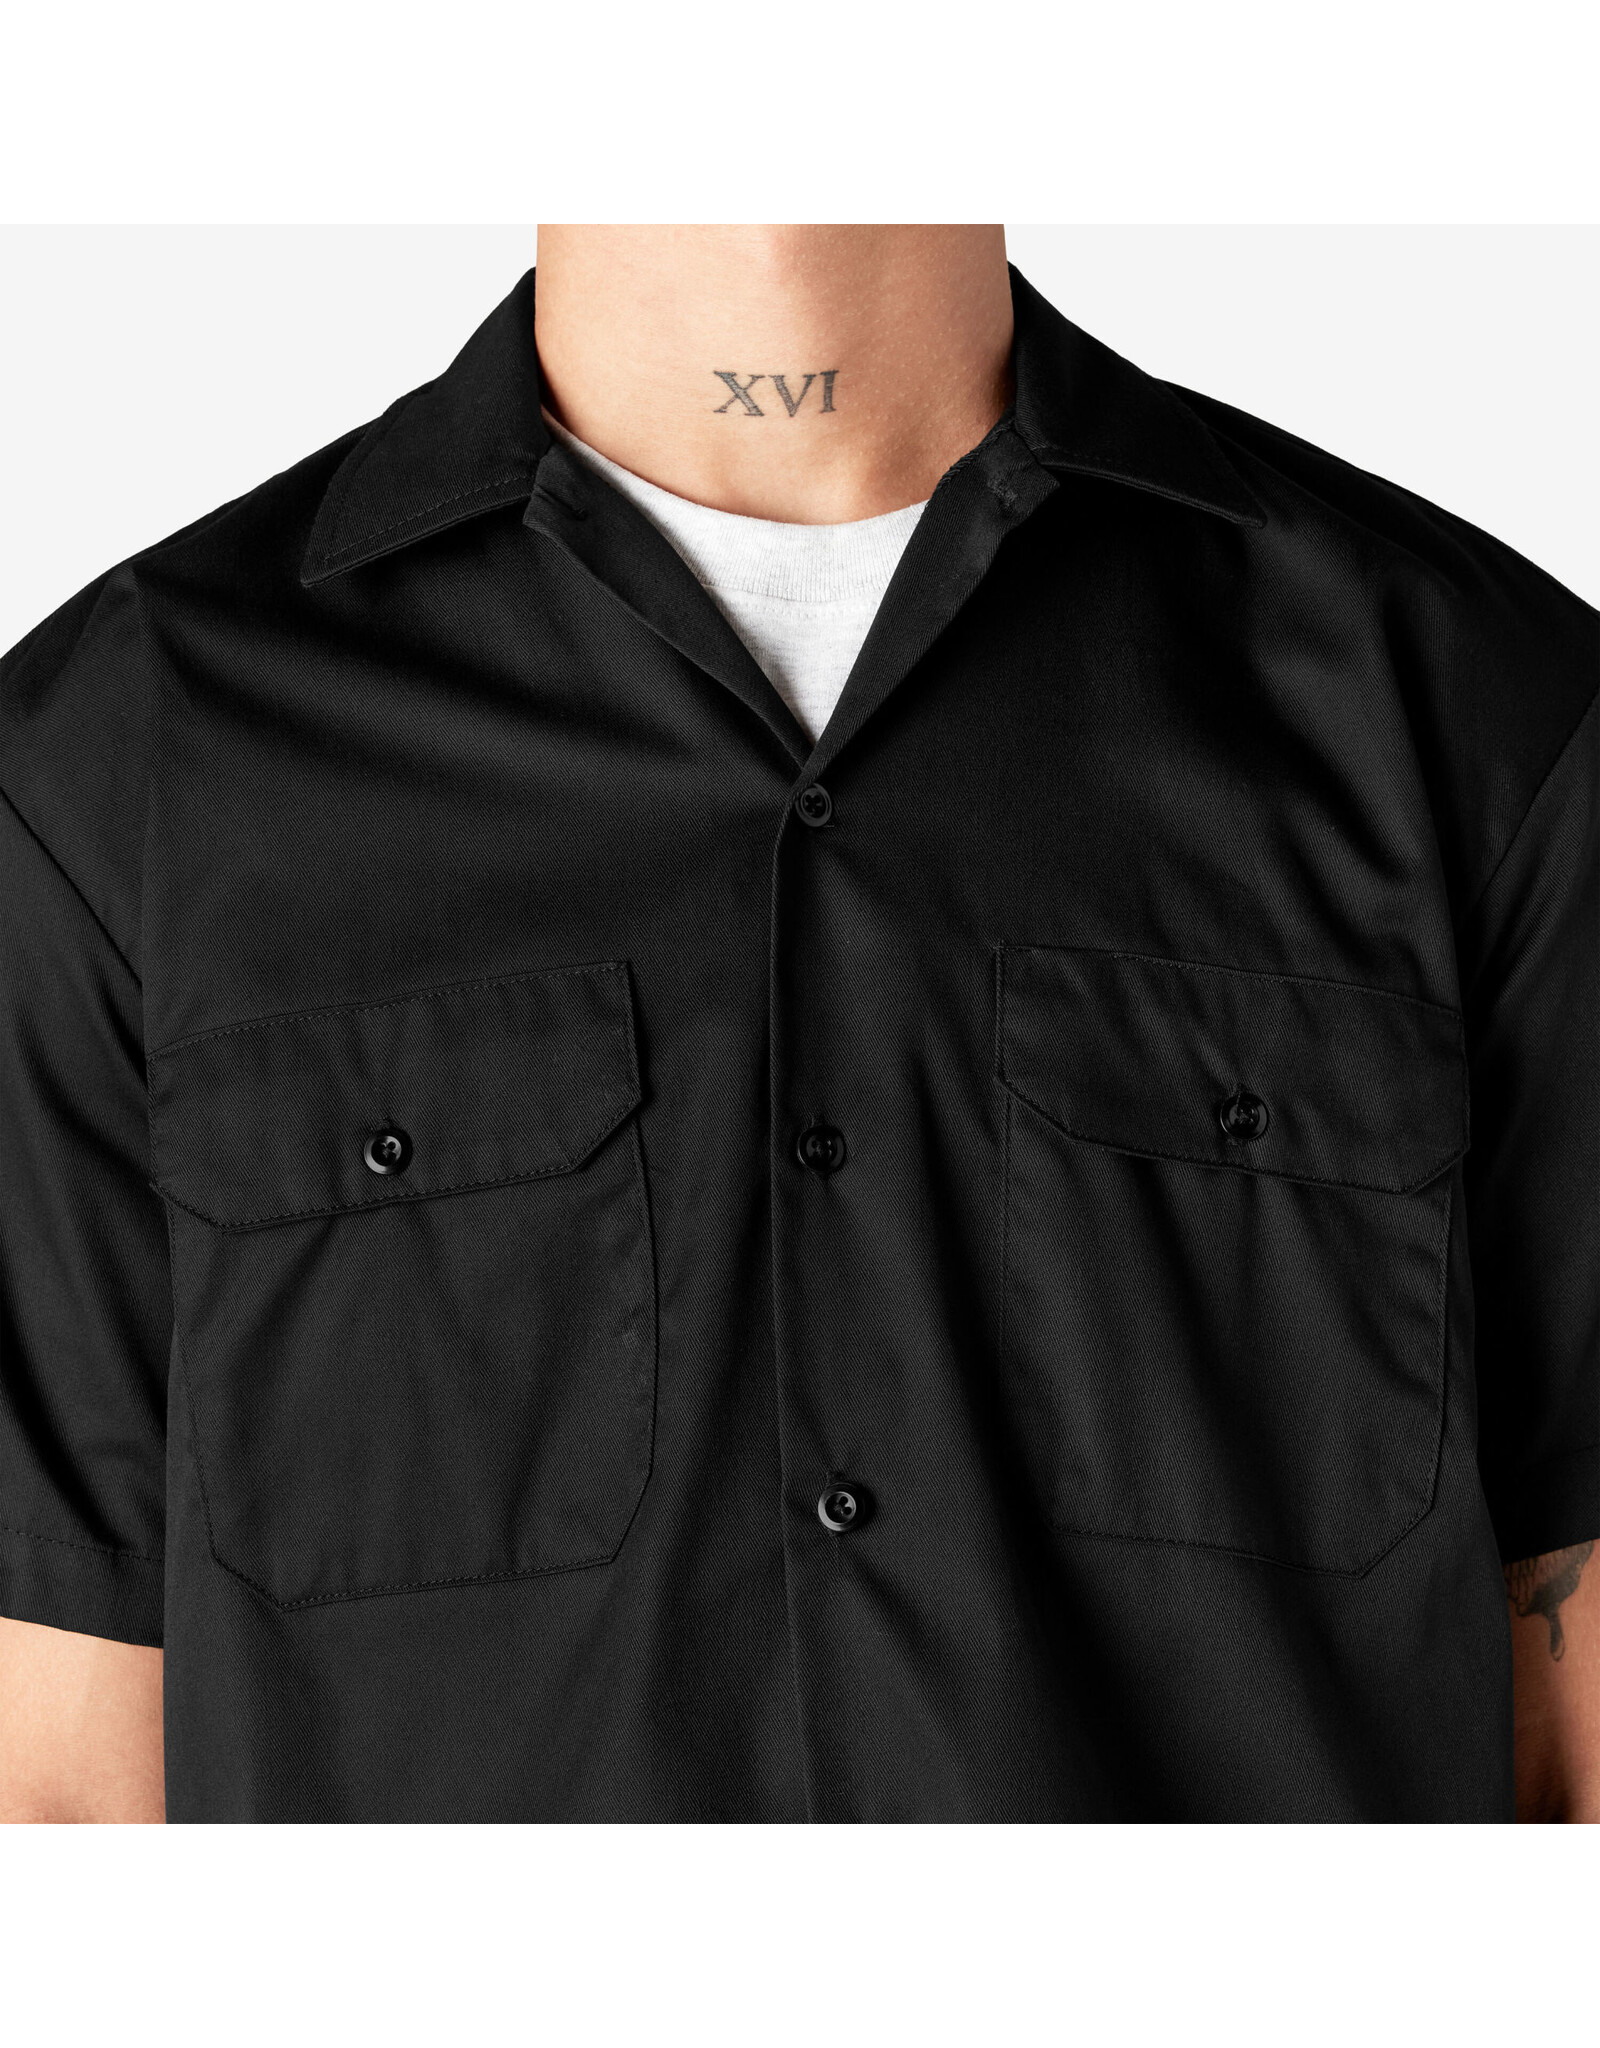 DICKIES Short Sleeve Work Shirt Black Original Fit - 1574BK